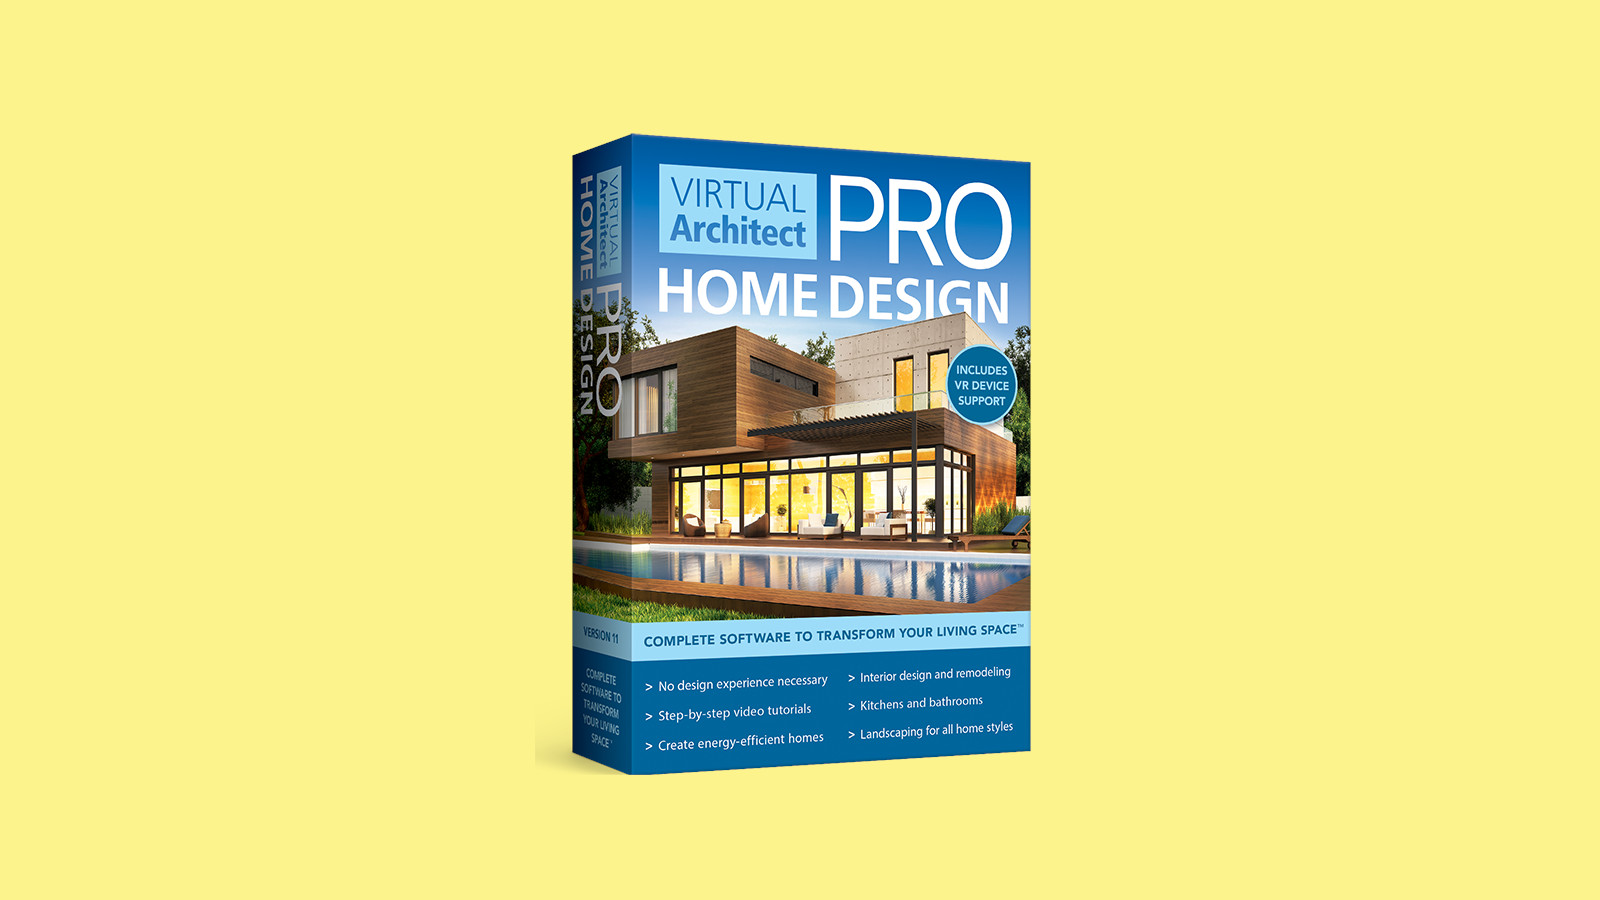 Virtual Architect Professional Home Design 11 CD Key, $258.03